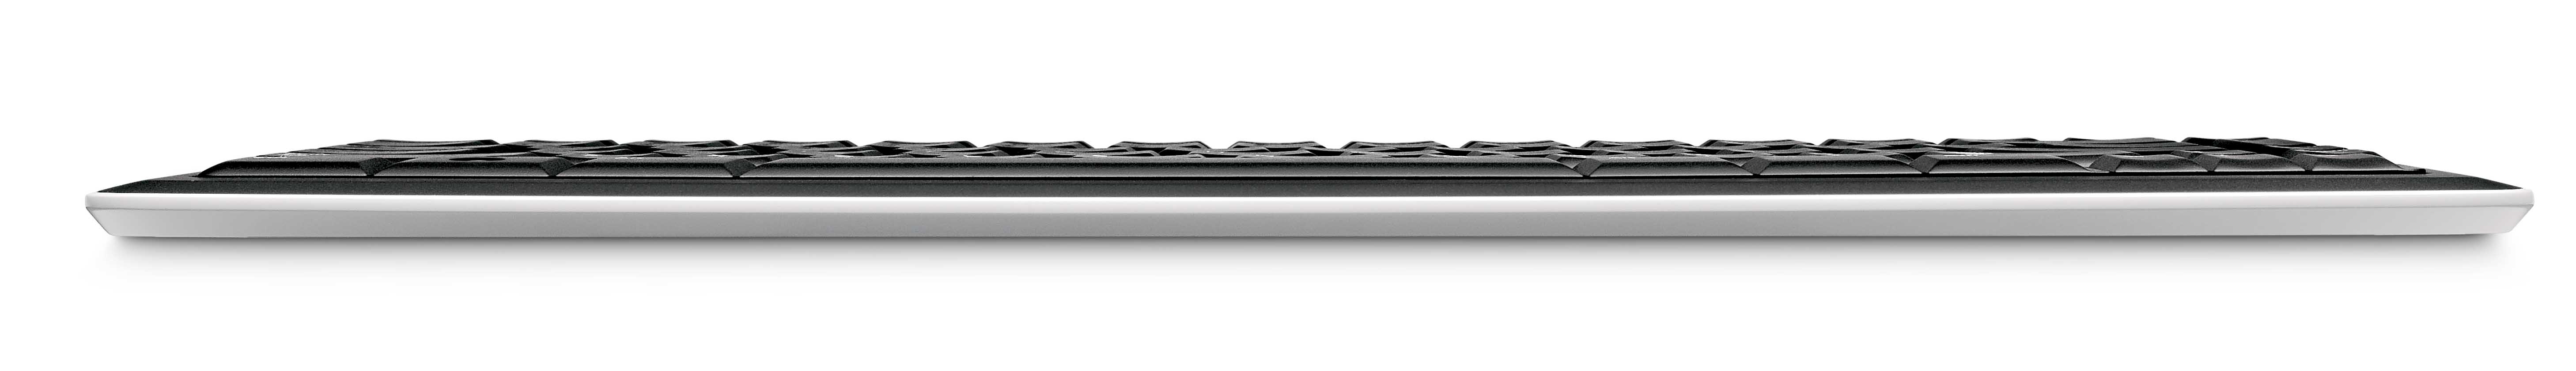 Microsoft Bluetooth Mobile Keyboard 6000 Debuts Slashgear